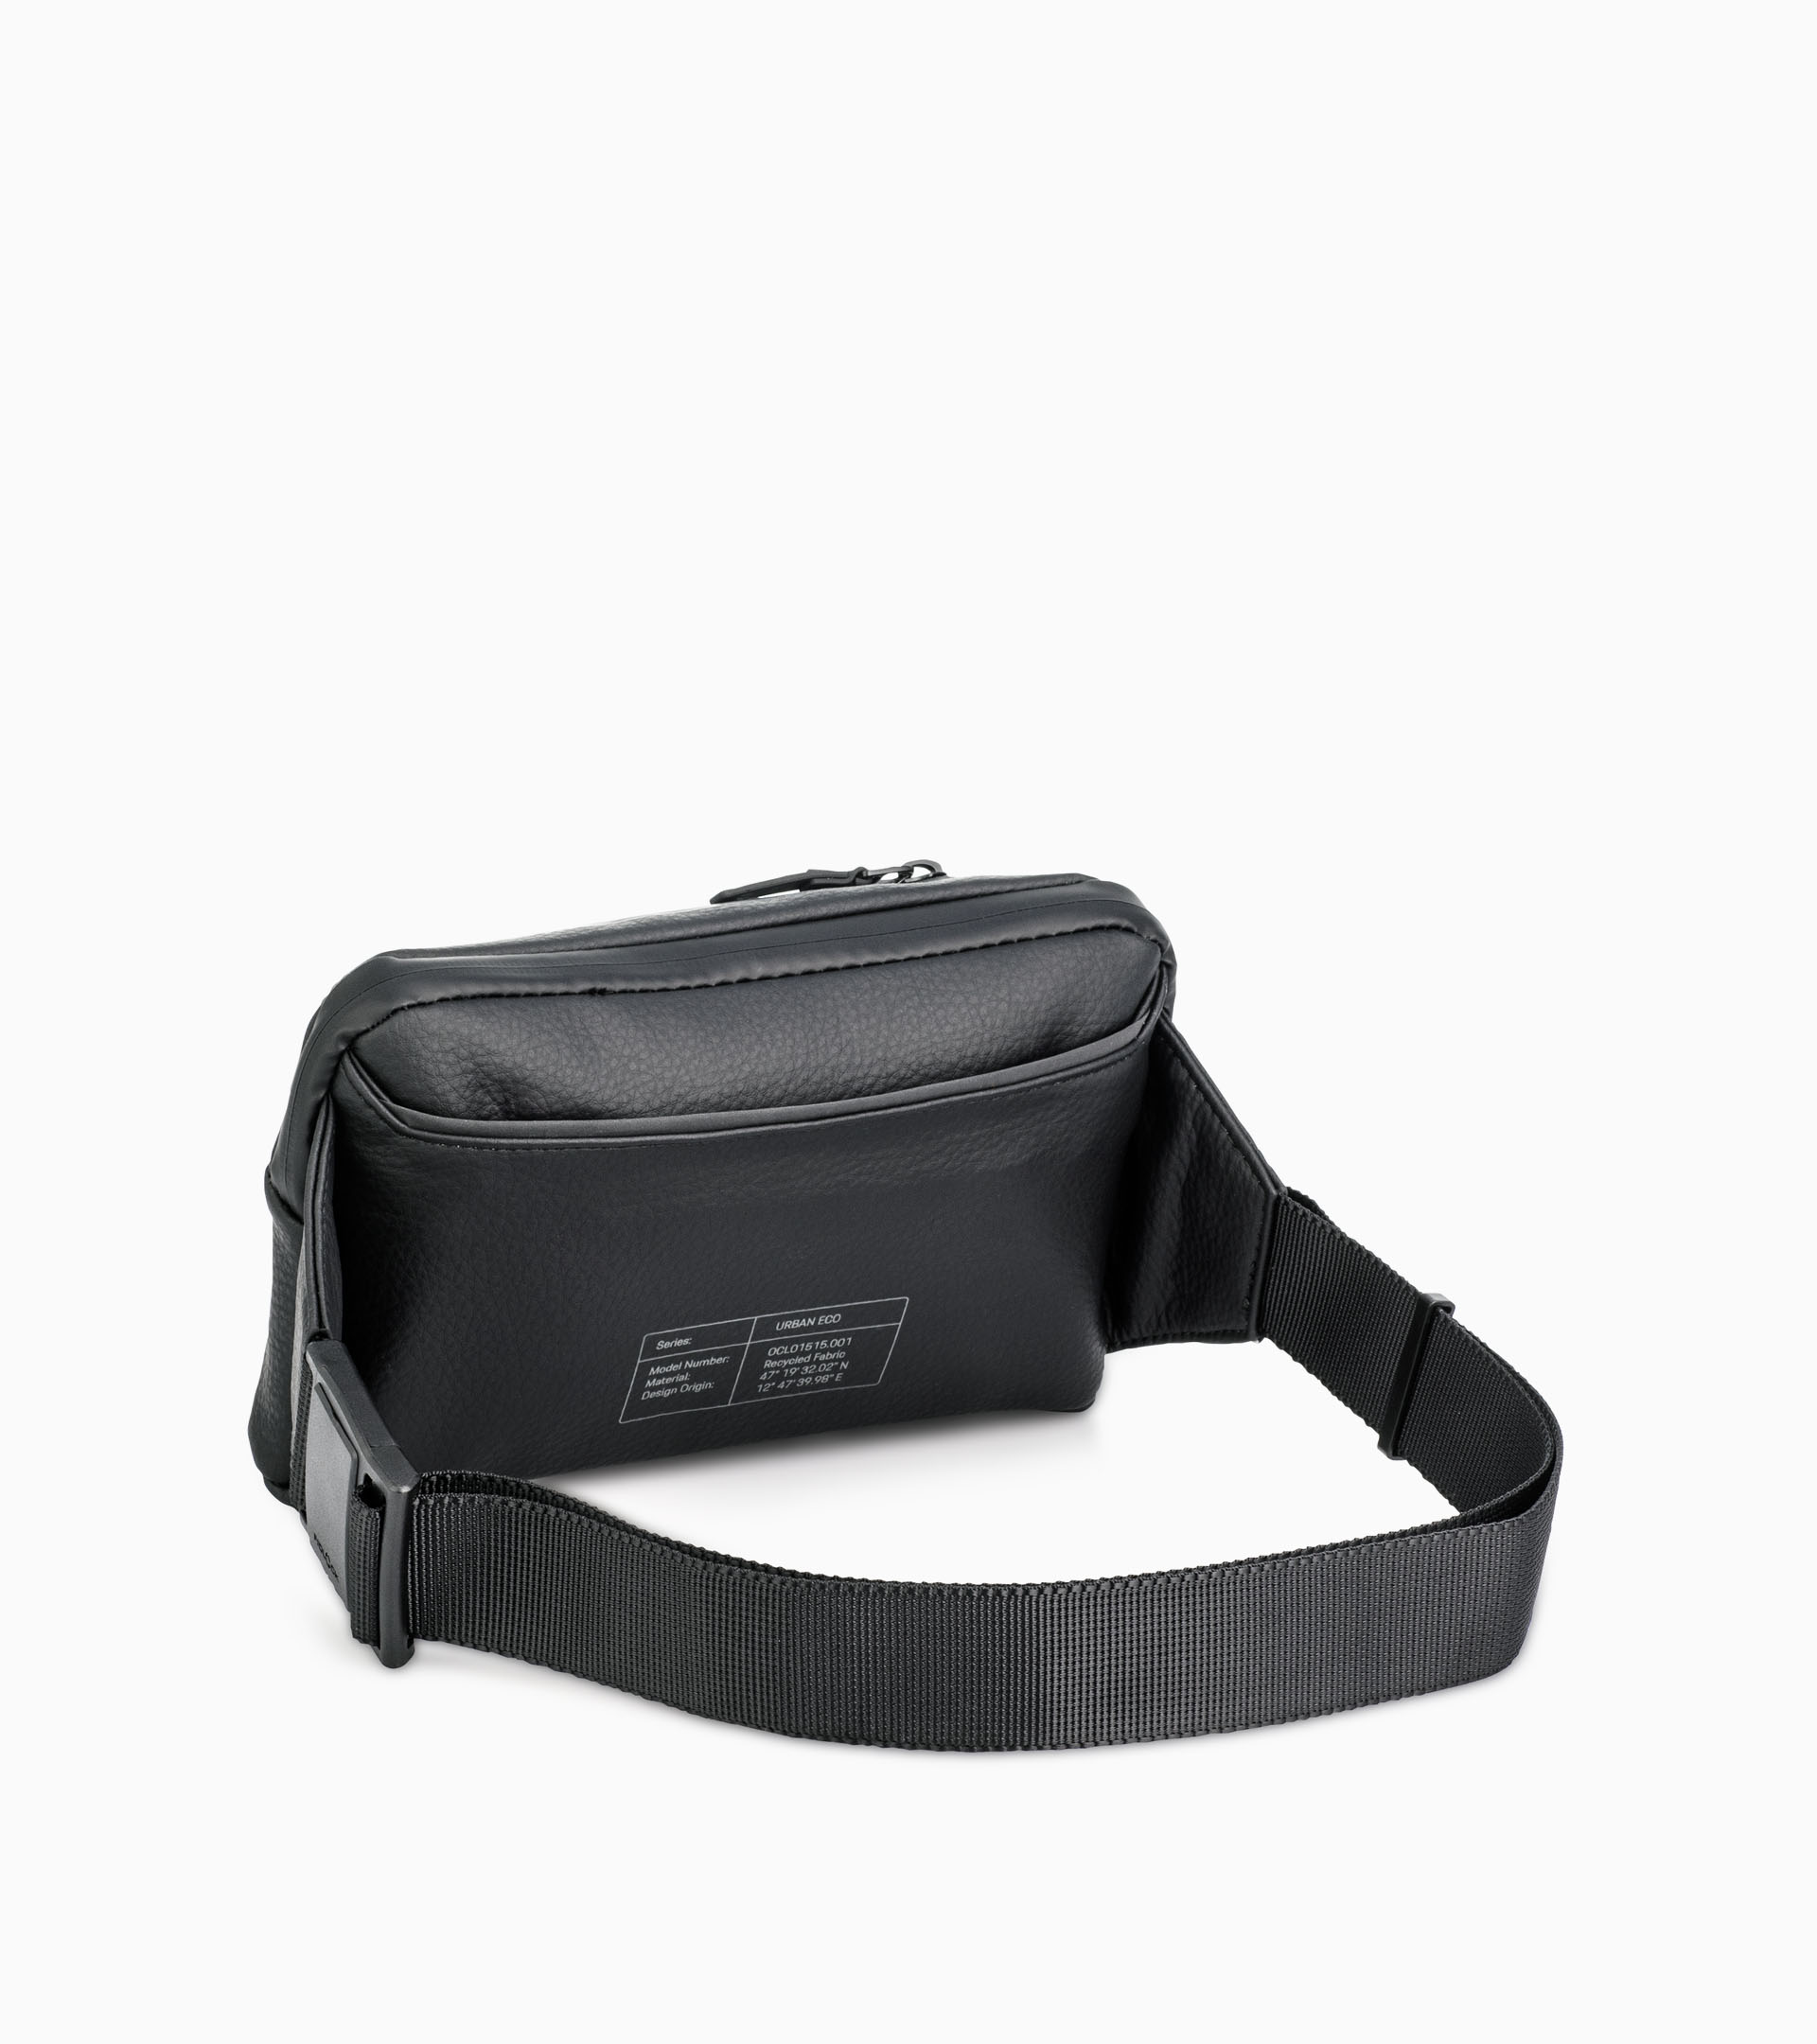 Urban Eco RL Belt Bag black - Men\'s Shoulder Bag - Practical & Comfortable  | Porsche Design | Porsche Design